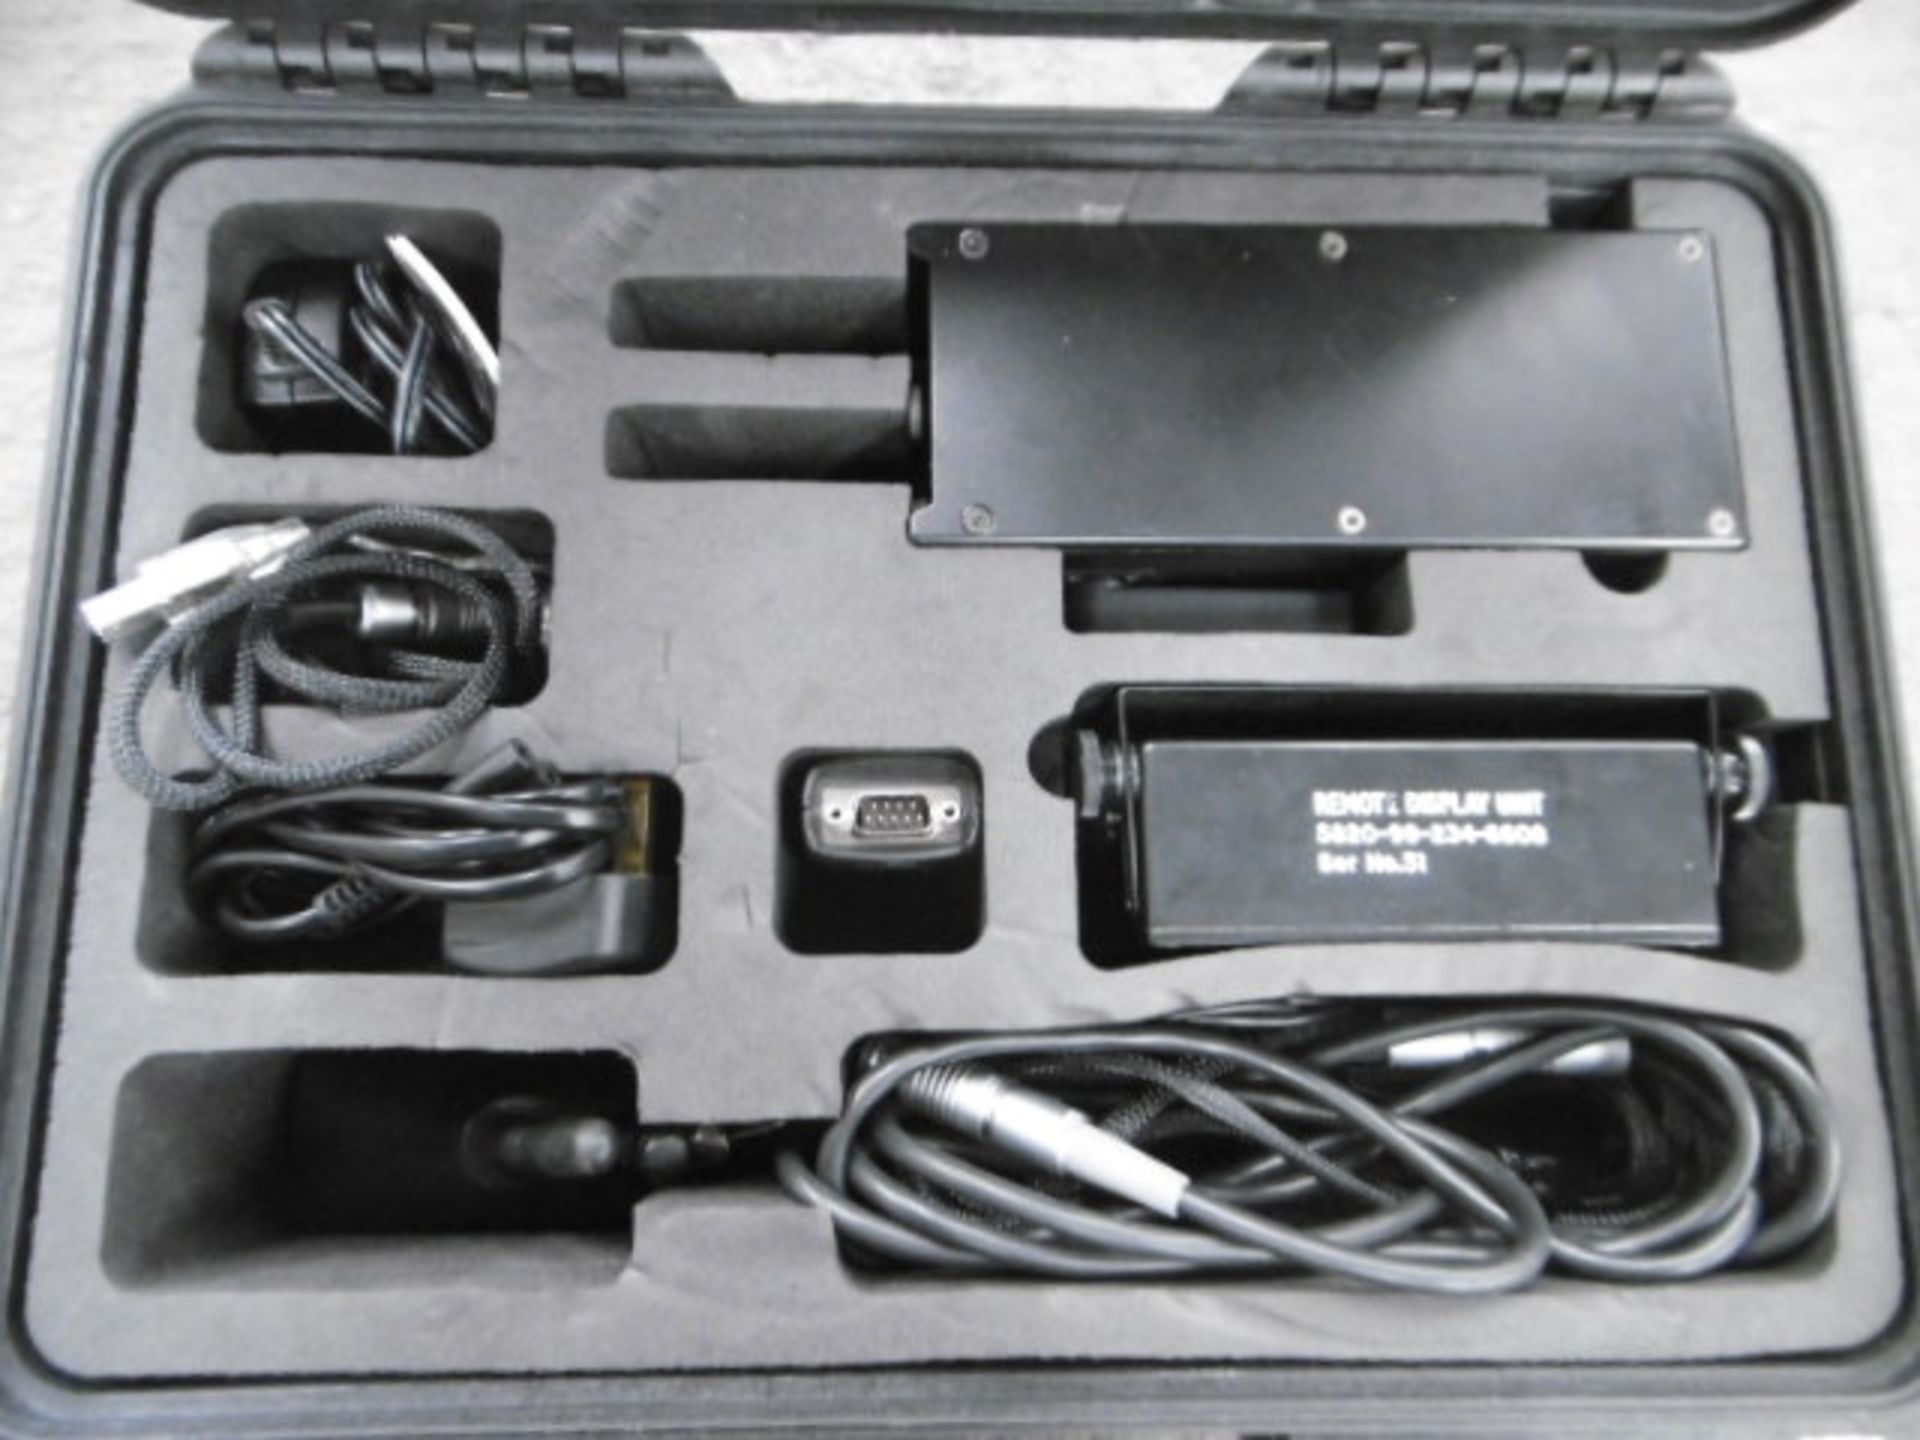 Radio Communication System in Secure Peli Case - Image 2 of 12